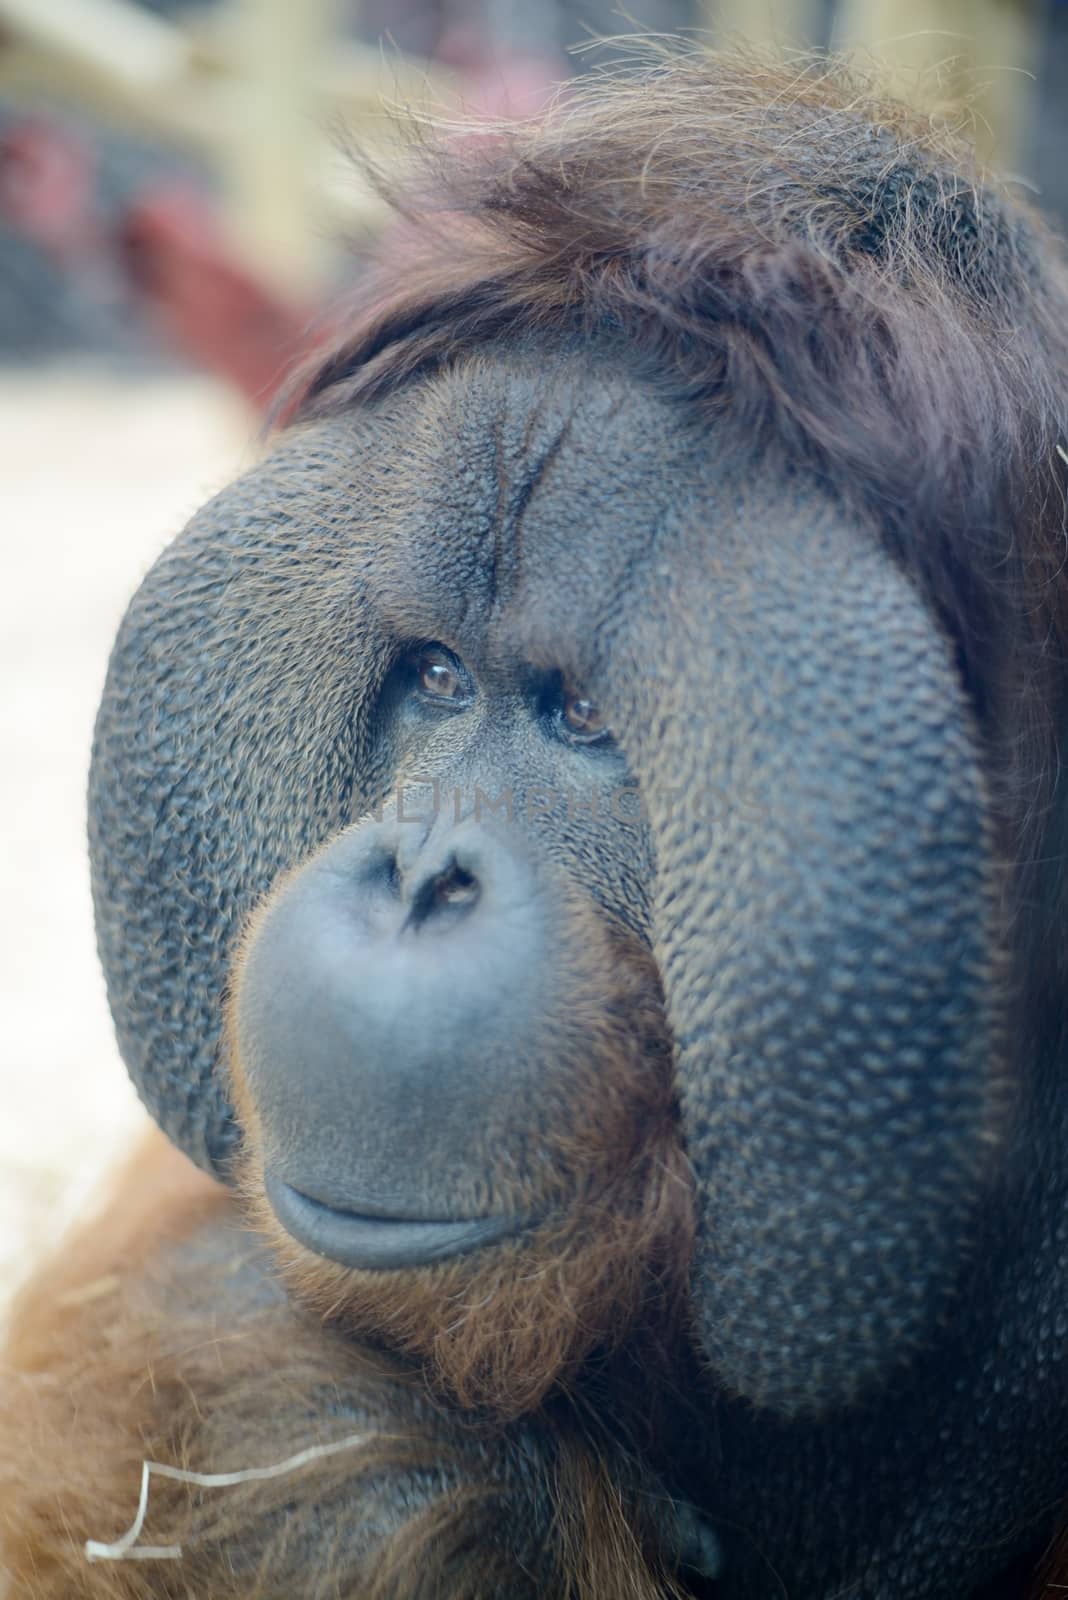 Orangutan face by kmwphotography